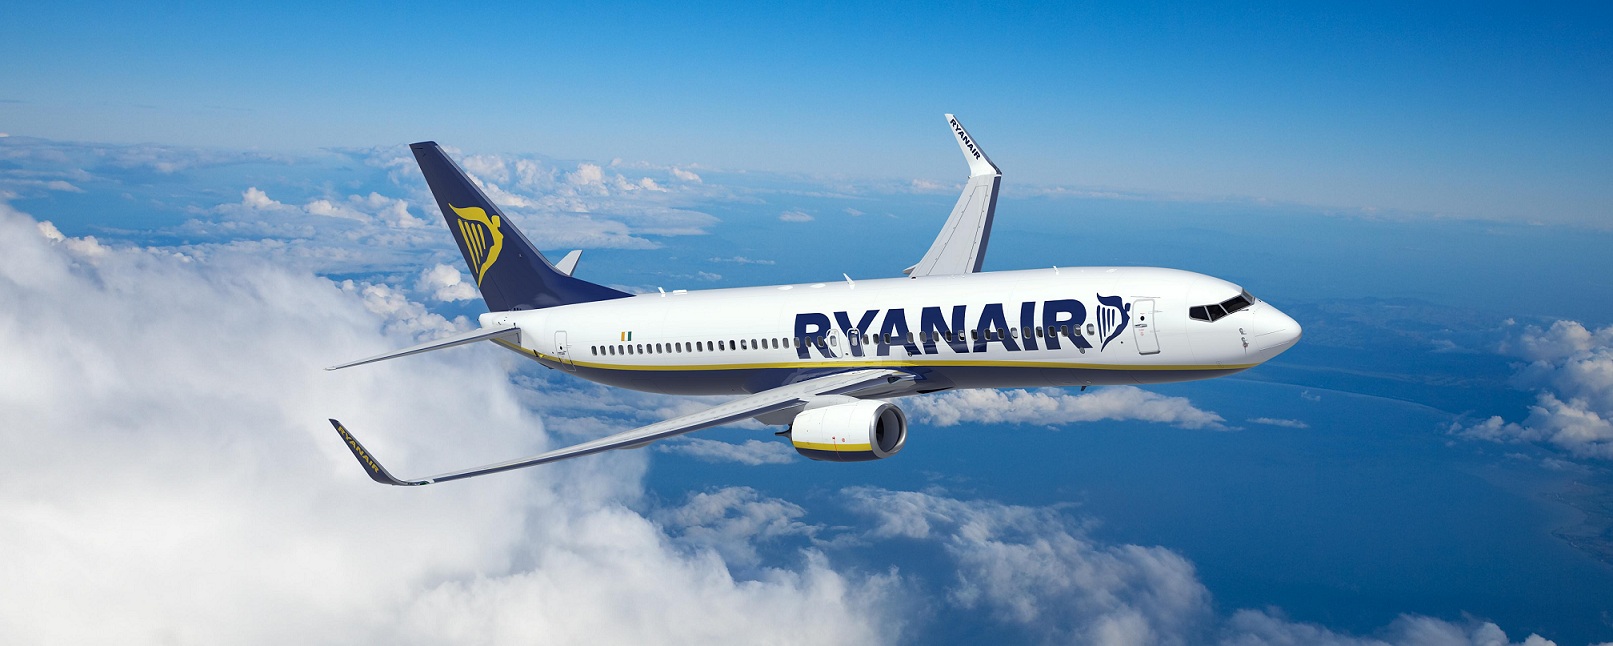 Ryanair начал распродажу на все маршруты из Украины: билеты от 13 евро - фото 1